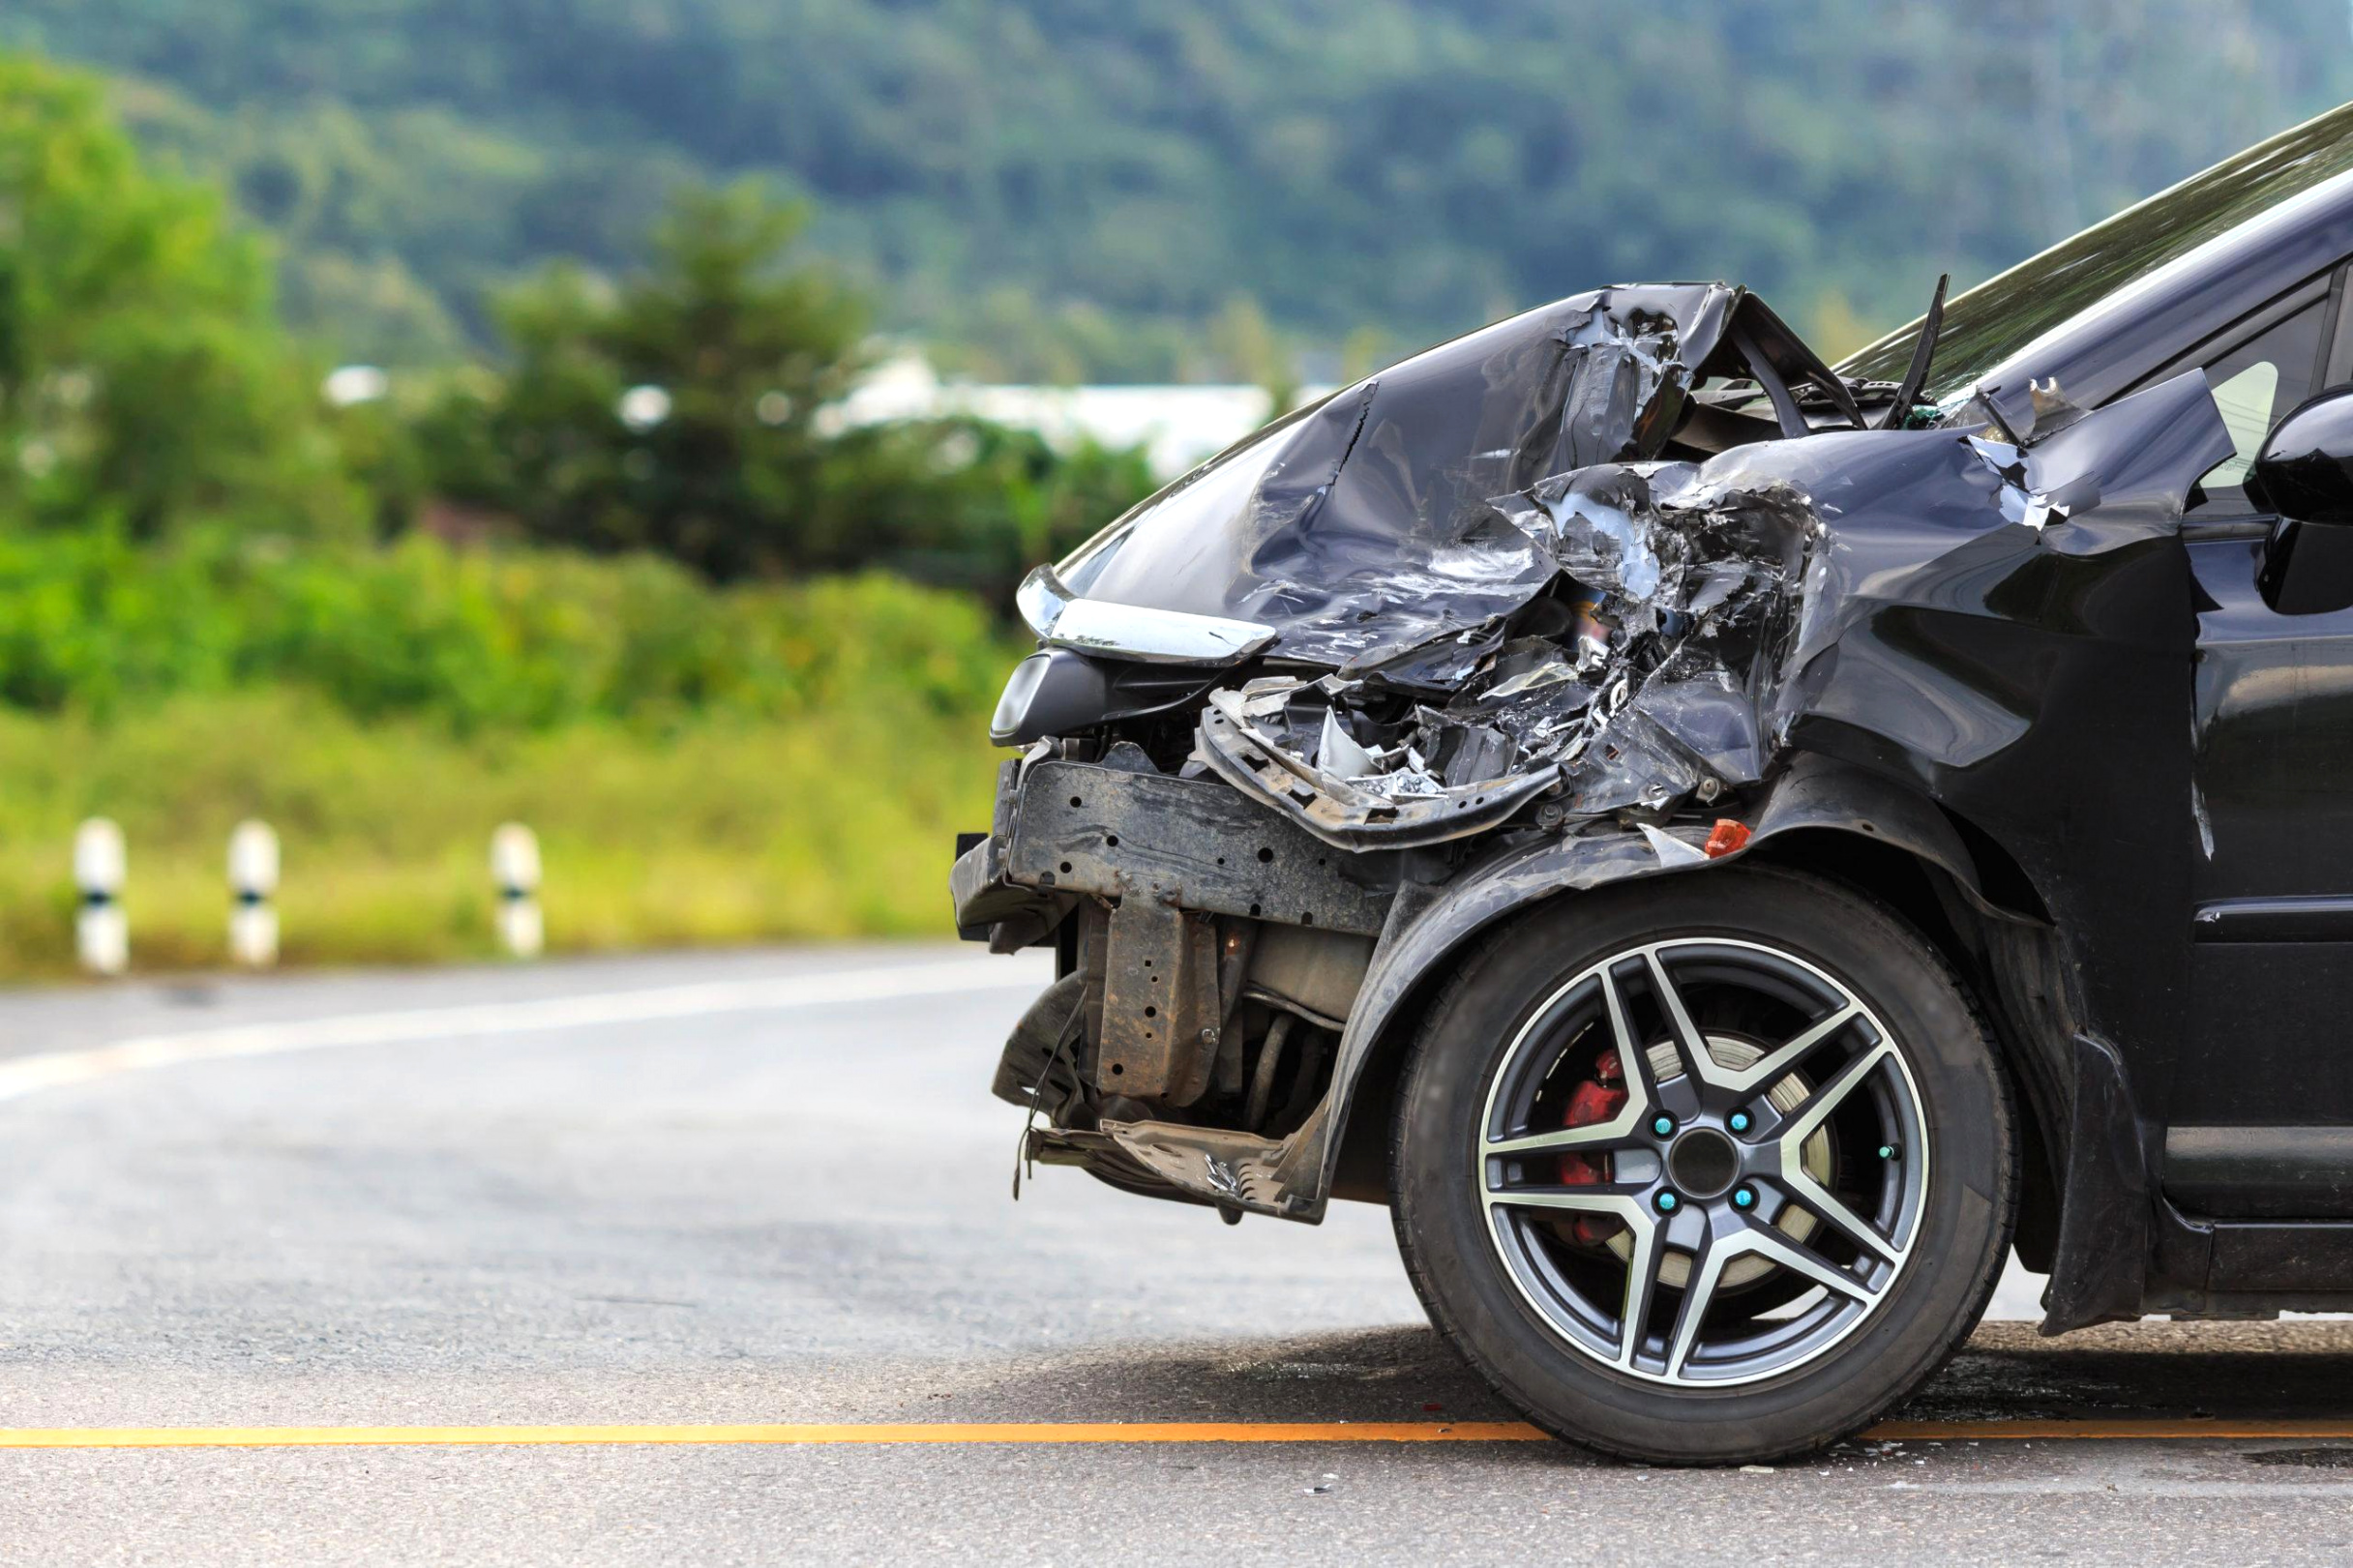 Car Accident Lawyer Cincinnati Dans Columbus Passenger Vehicle Accident Lawyers Car Accidents